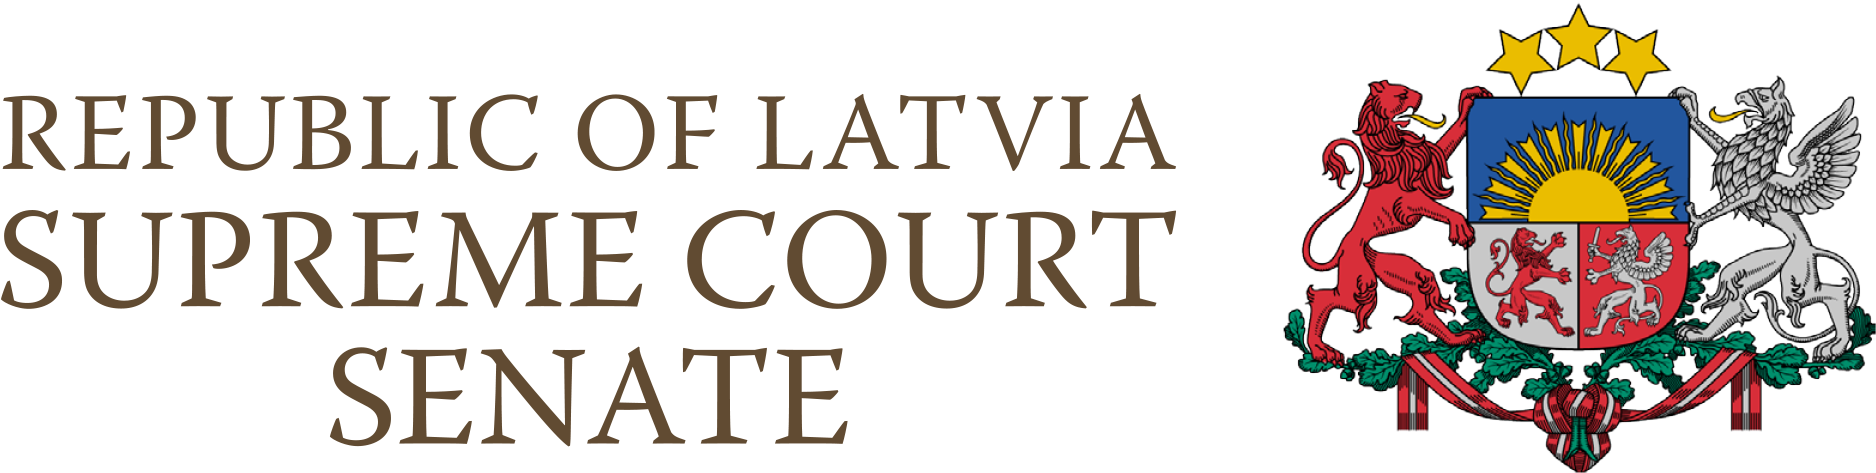 Latvia Supreme Court Senate Emblem PNG image